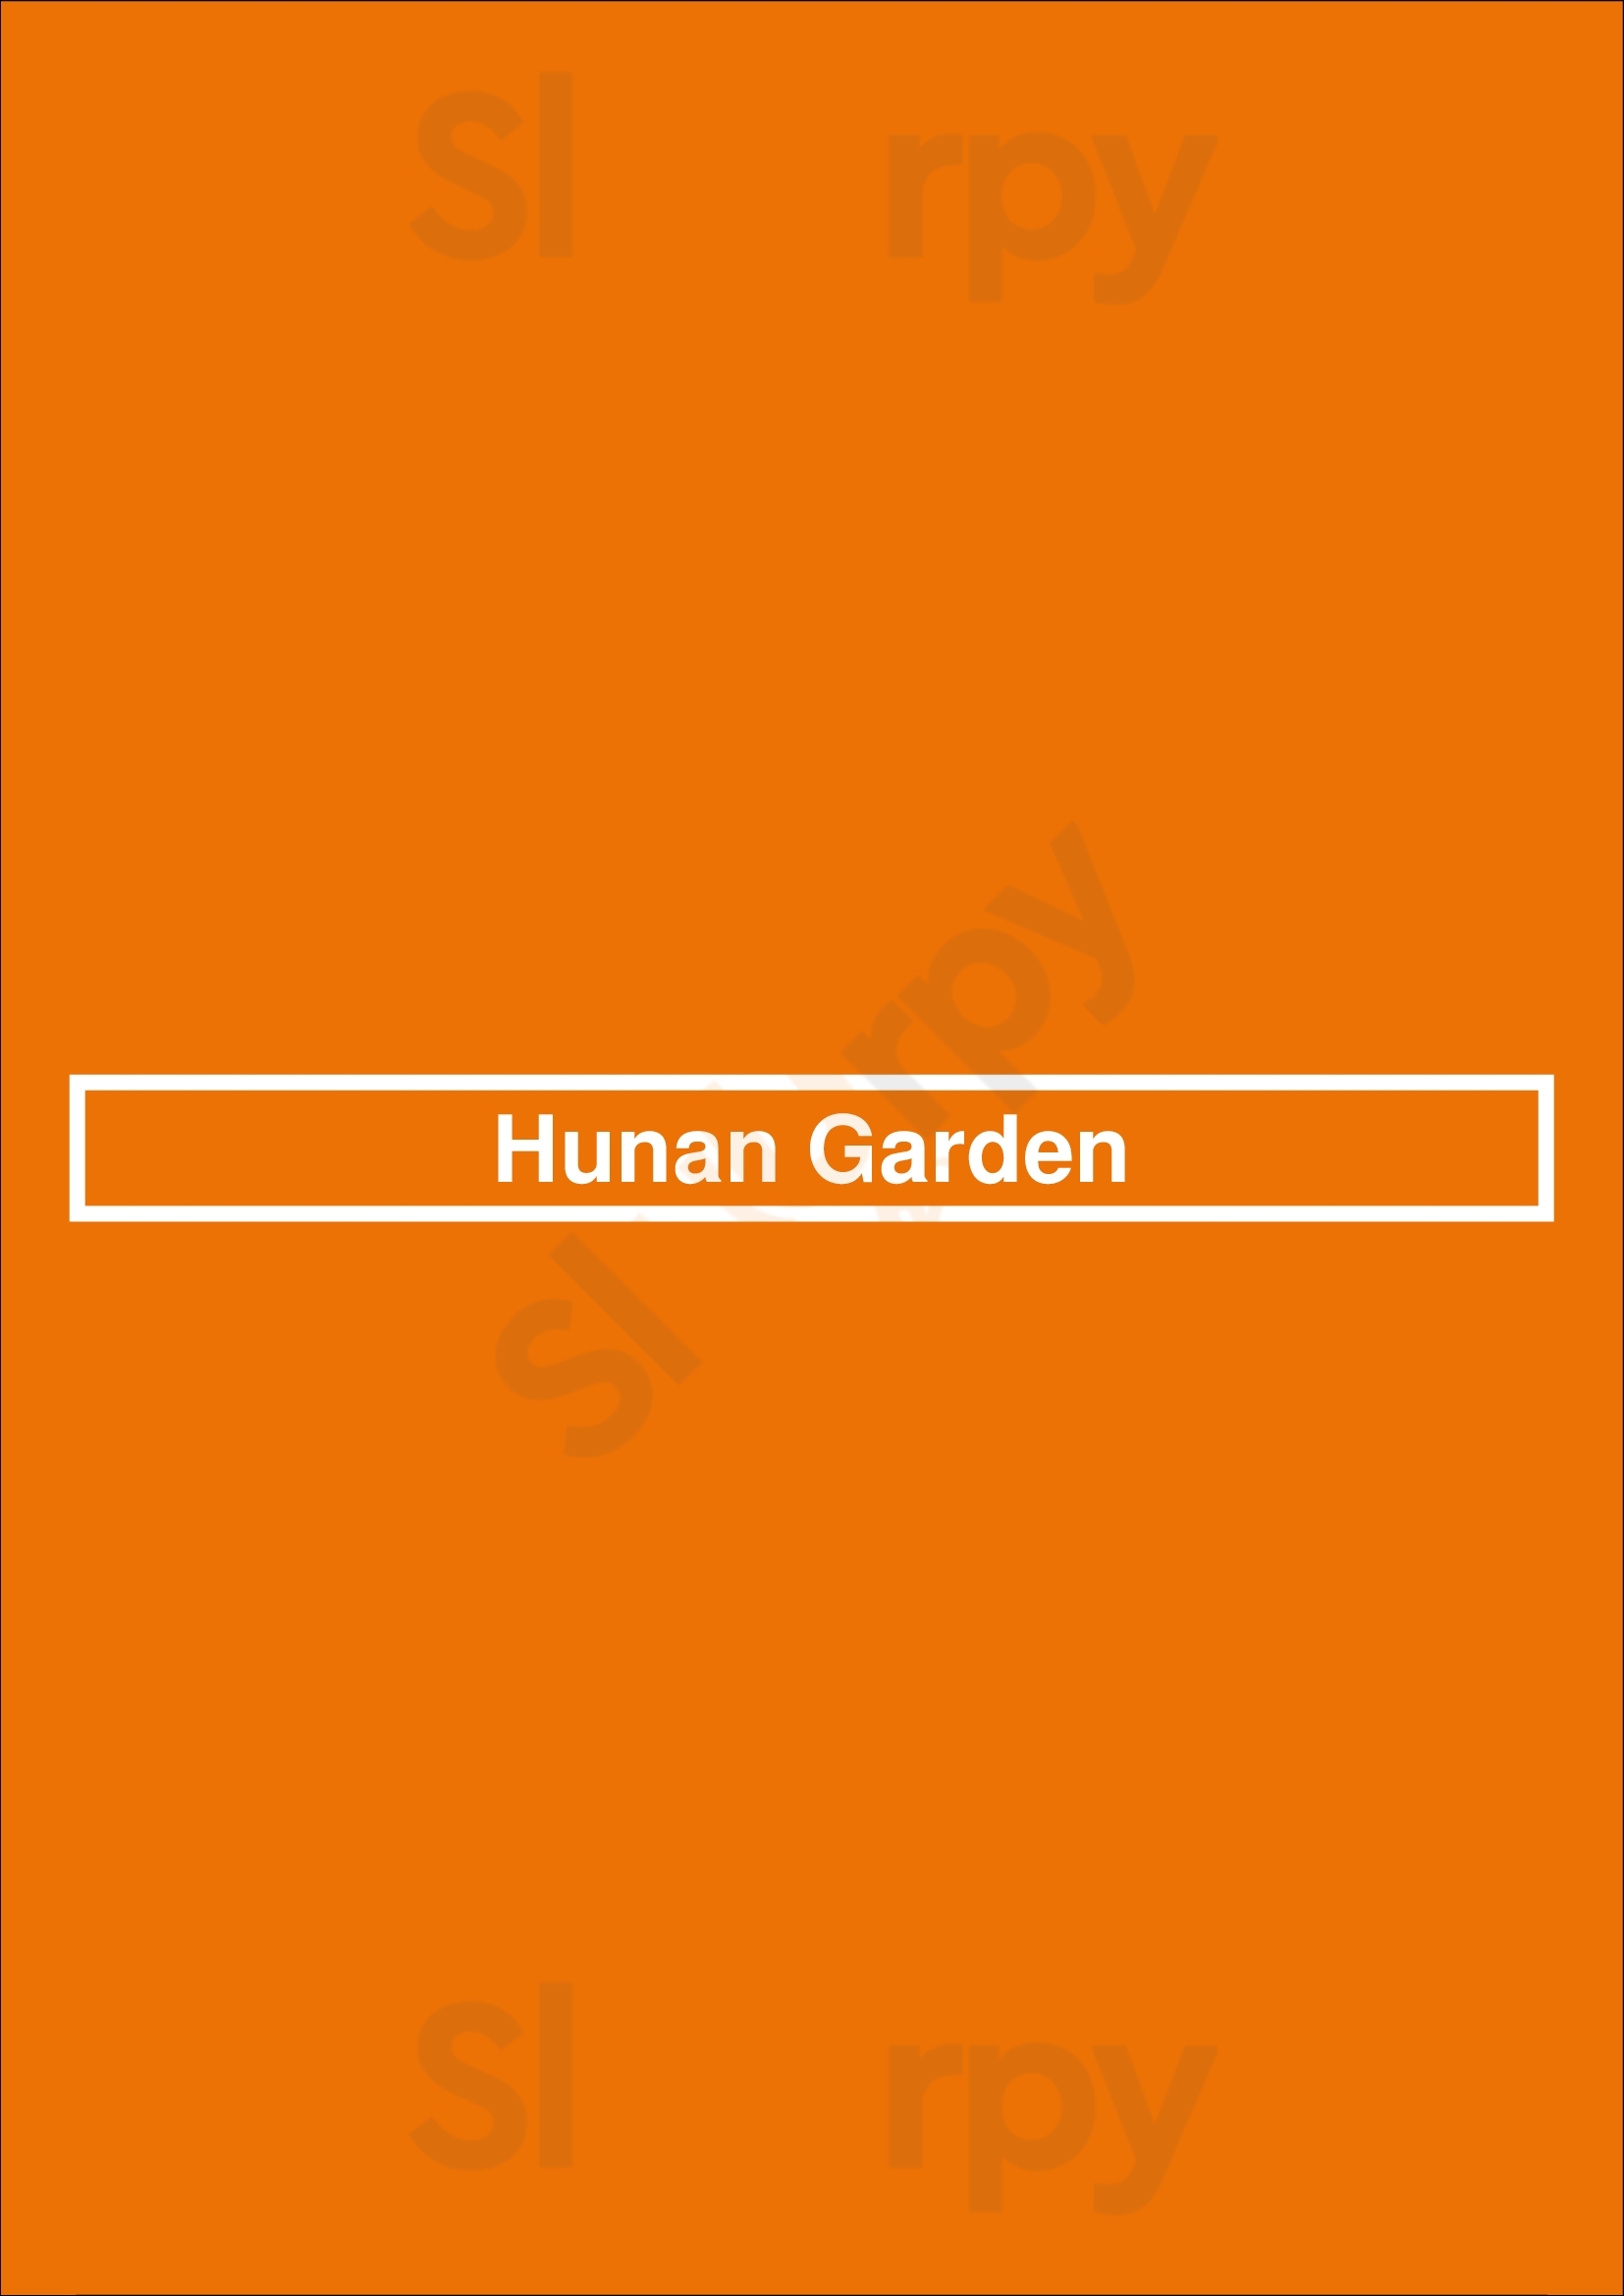 Hunan Garden Salt Lake City Menu - 1